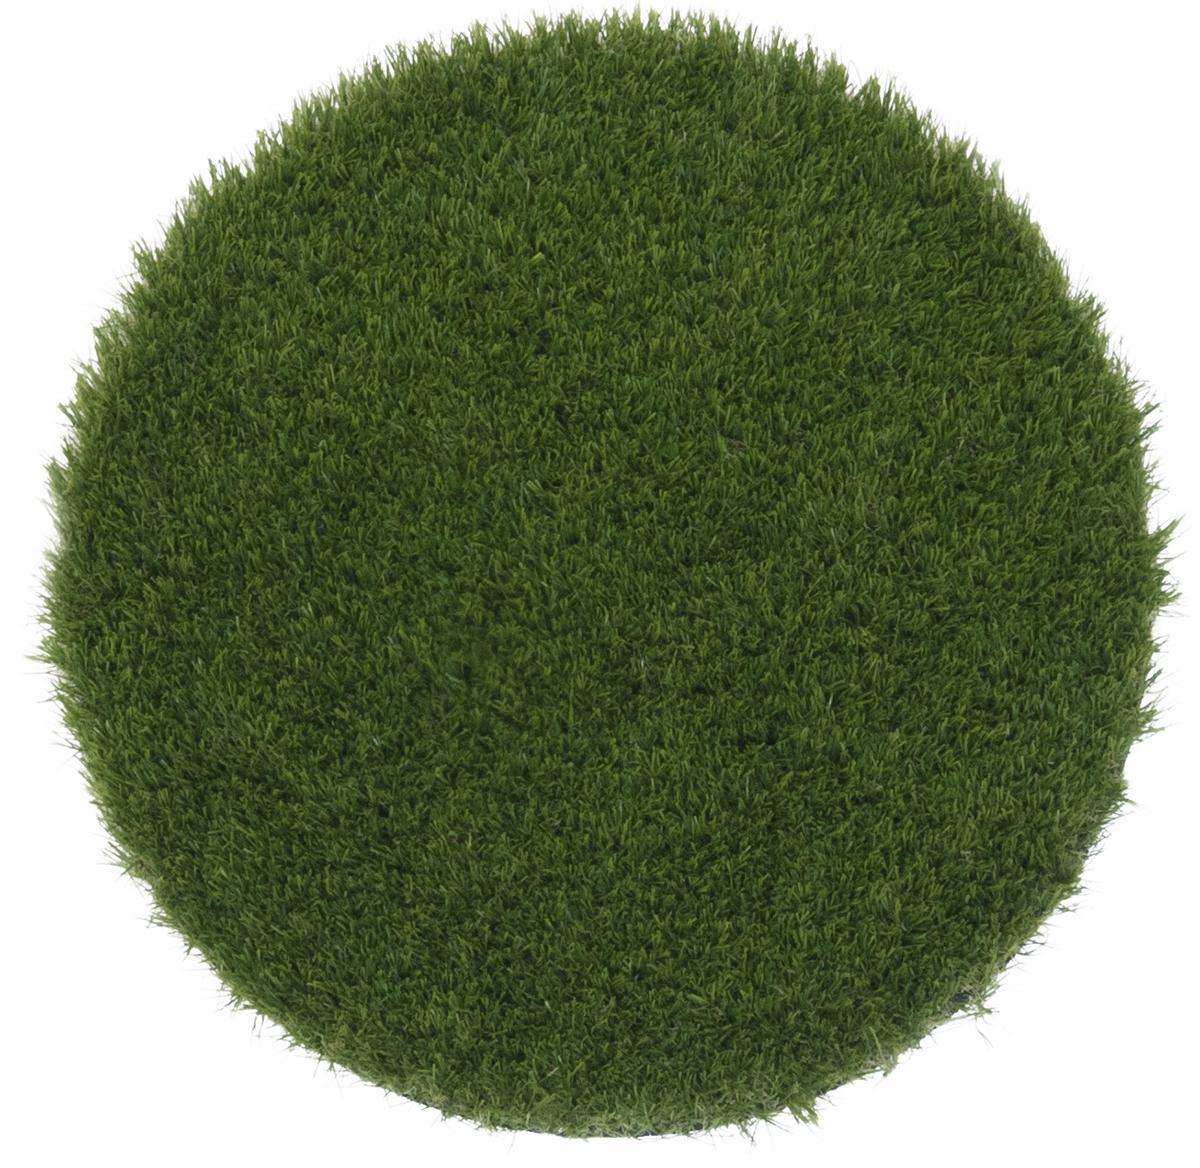  GreenSpace Artificial Grass Rounds Set of 12 